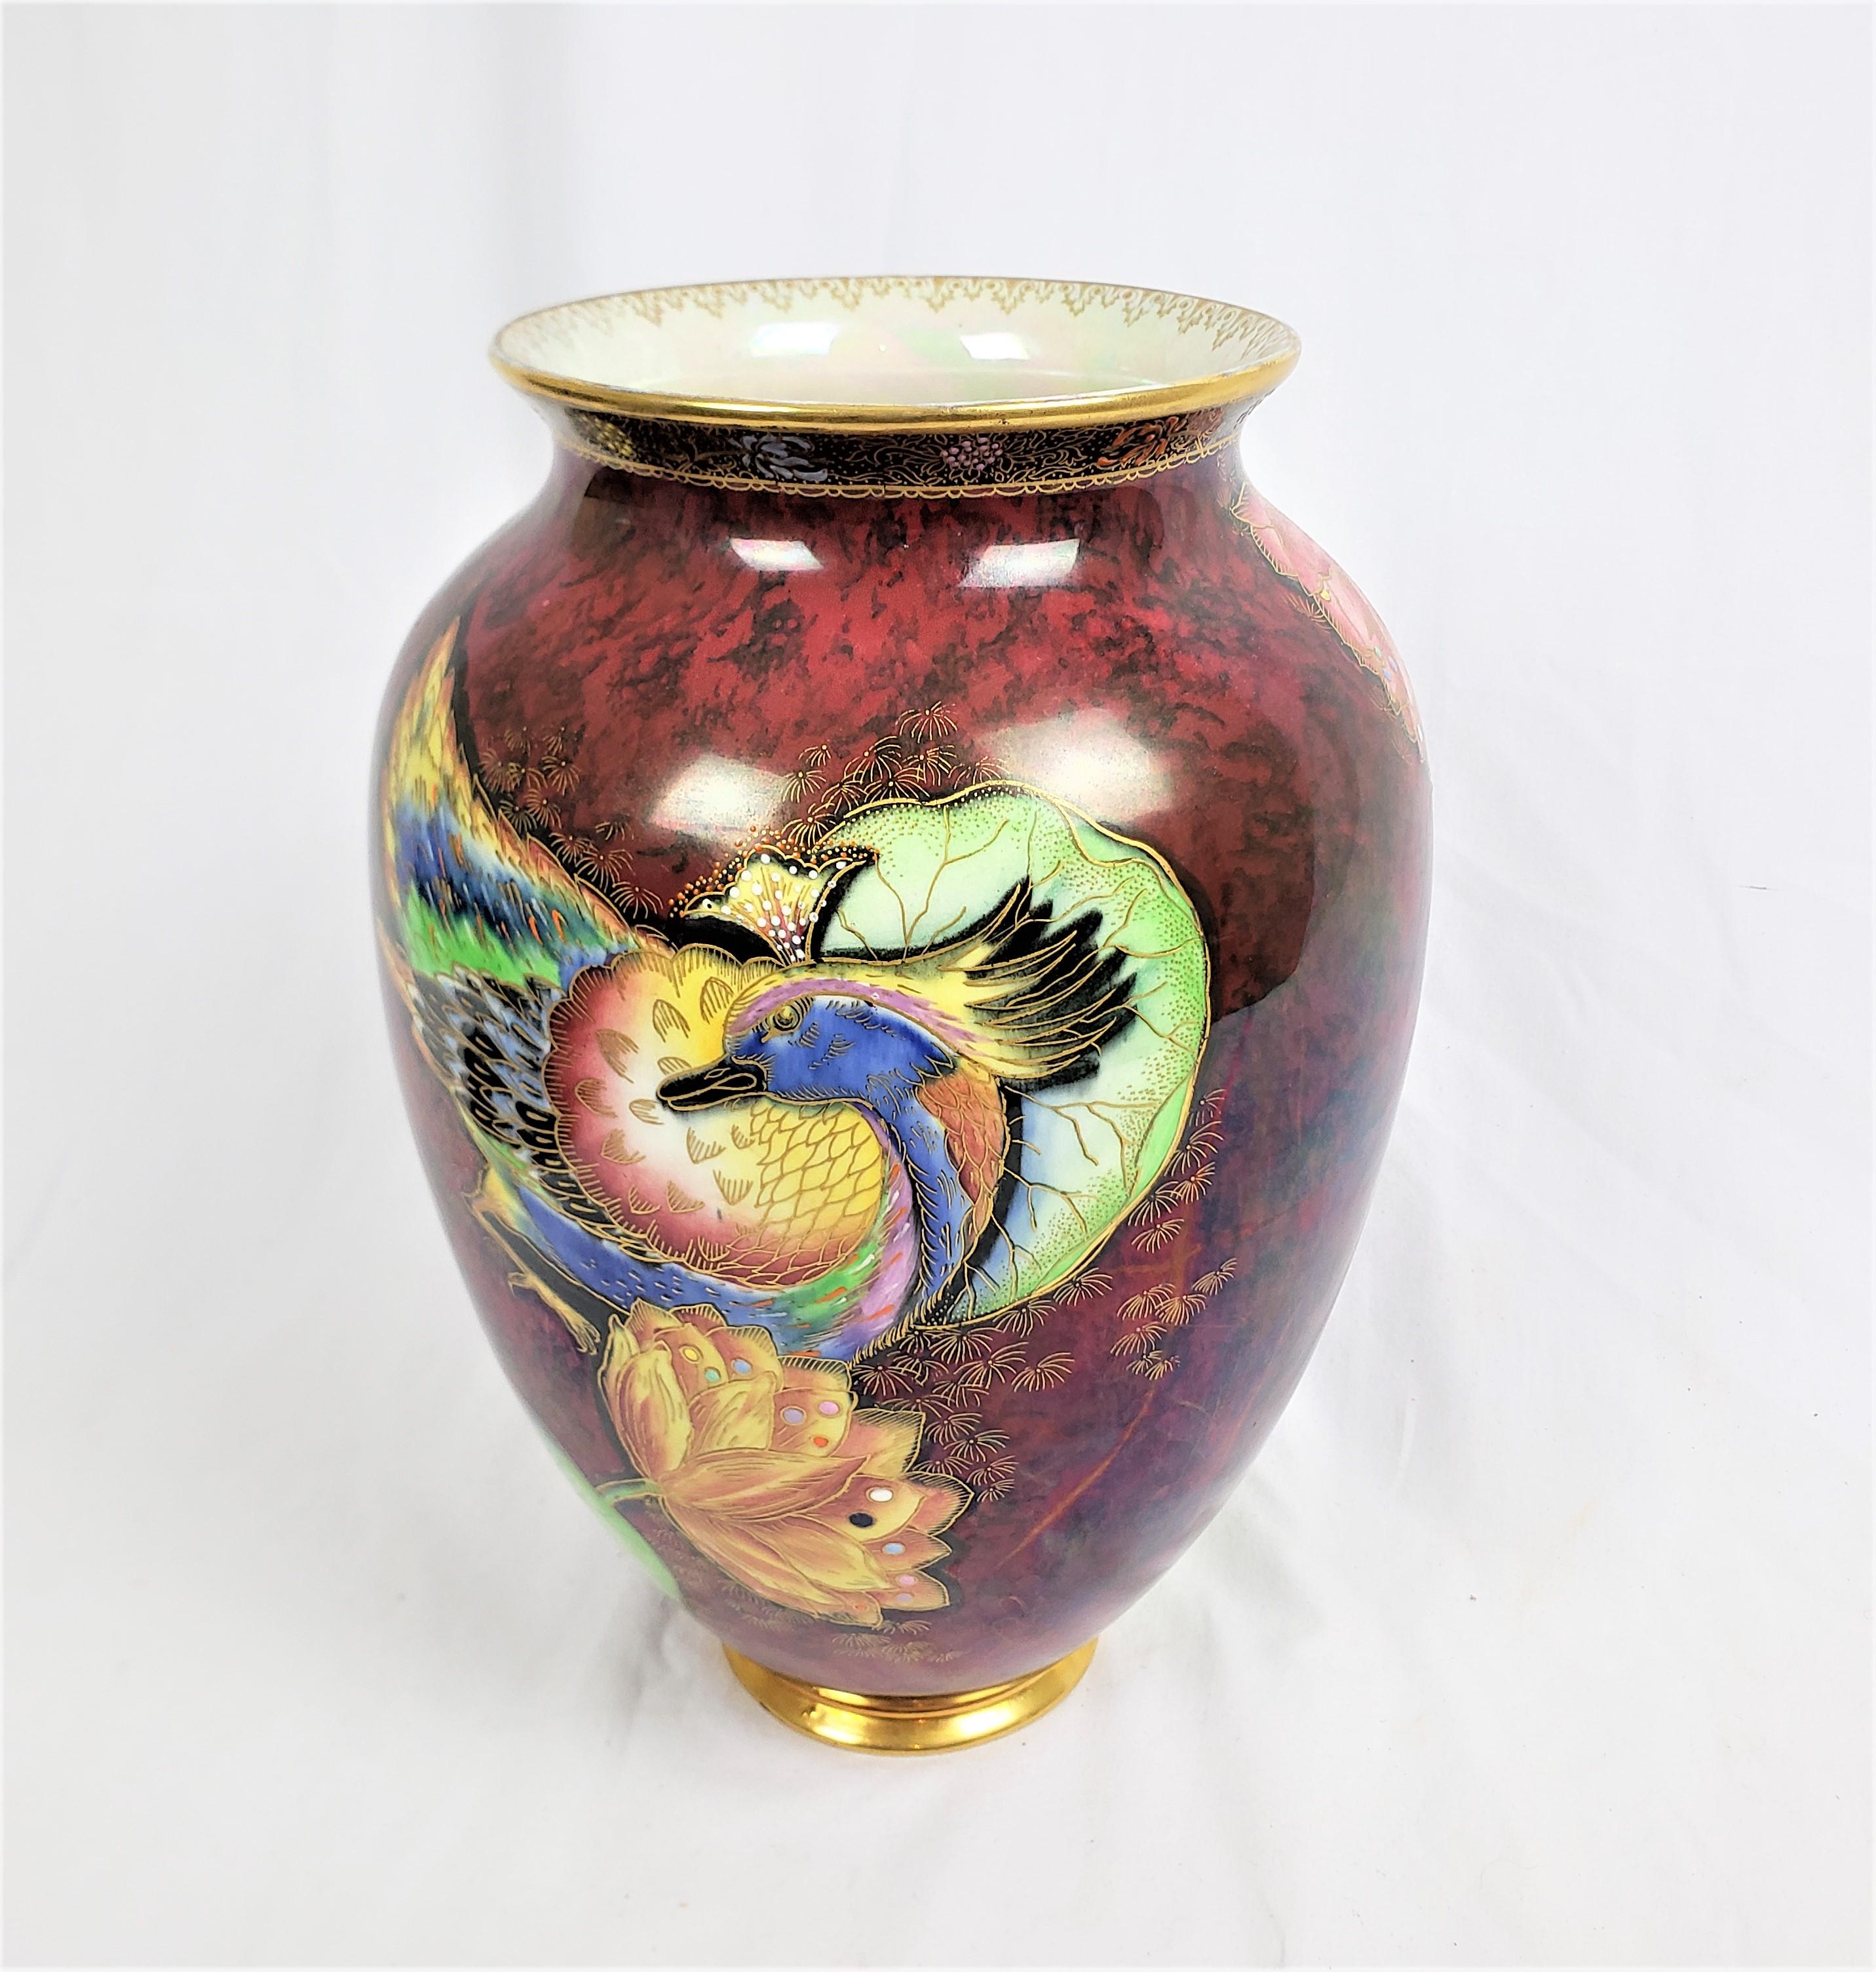 English Antique Art Deco Era Carlton Ware Vase with Asian Inspired Decoration